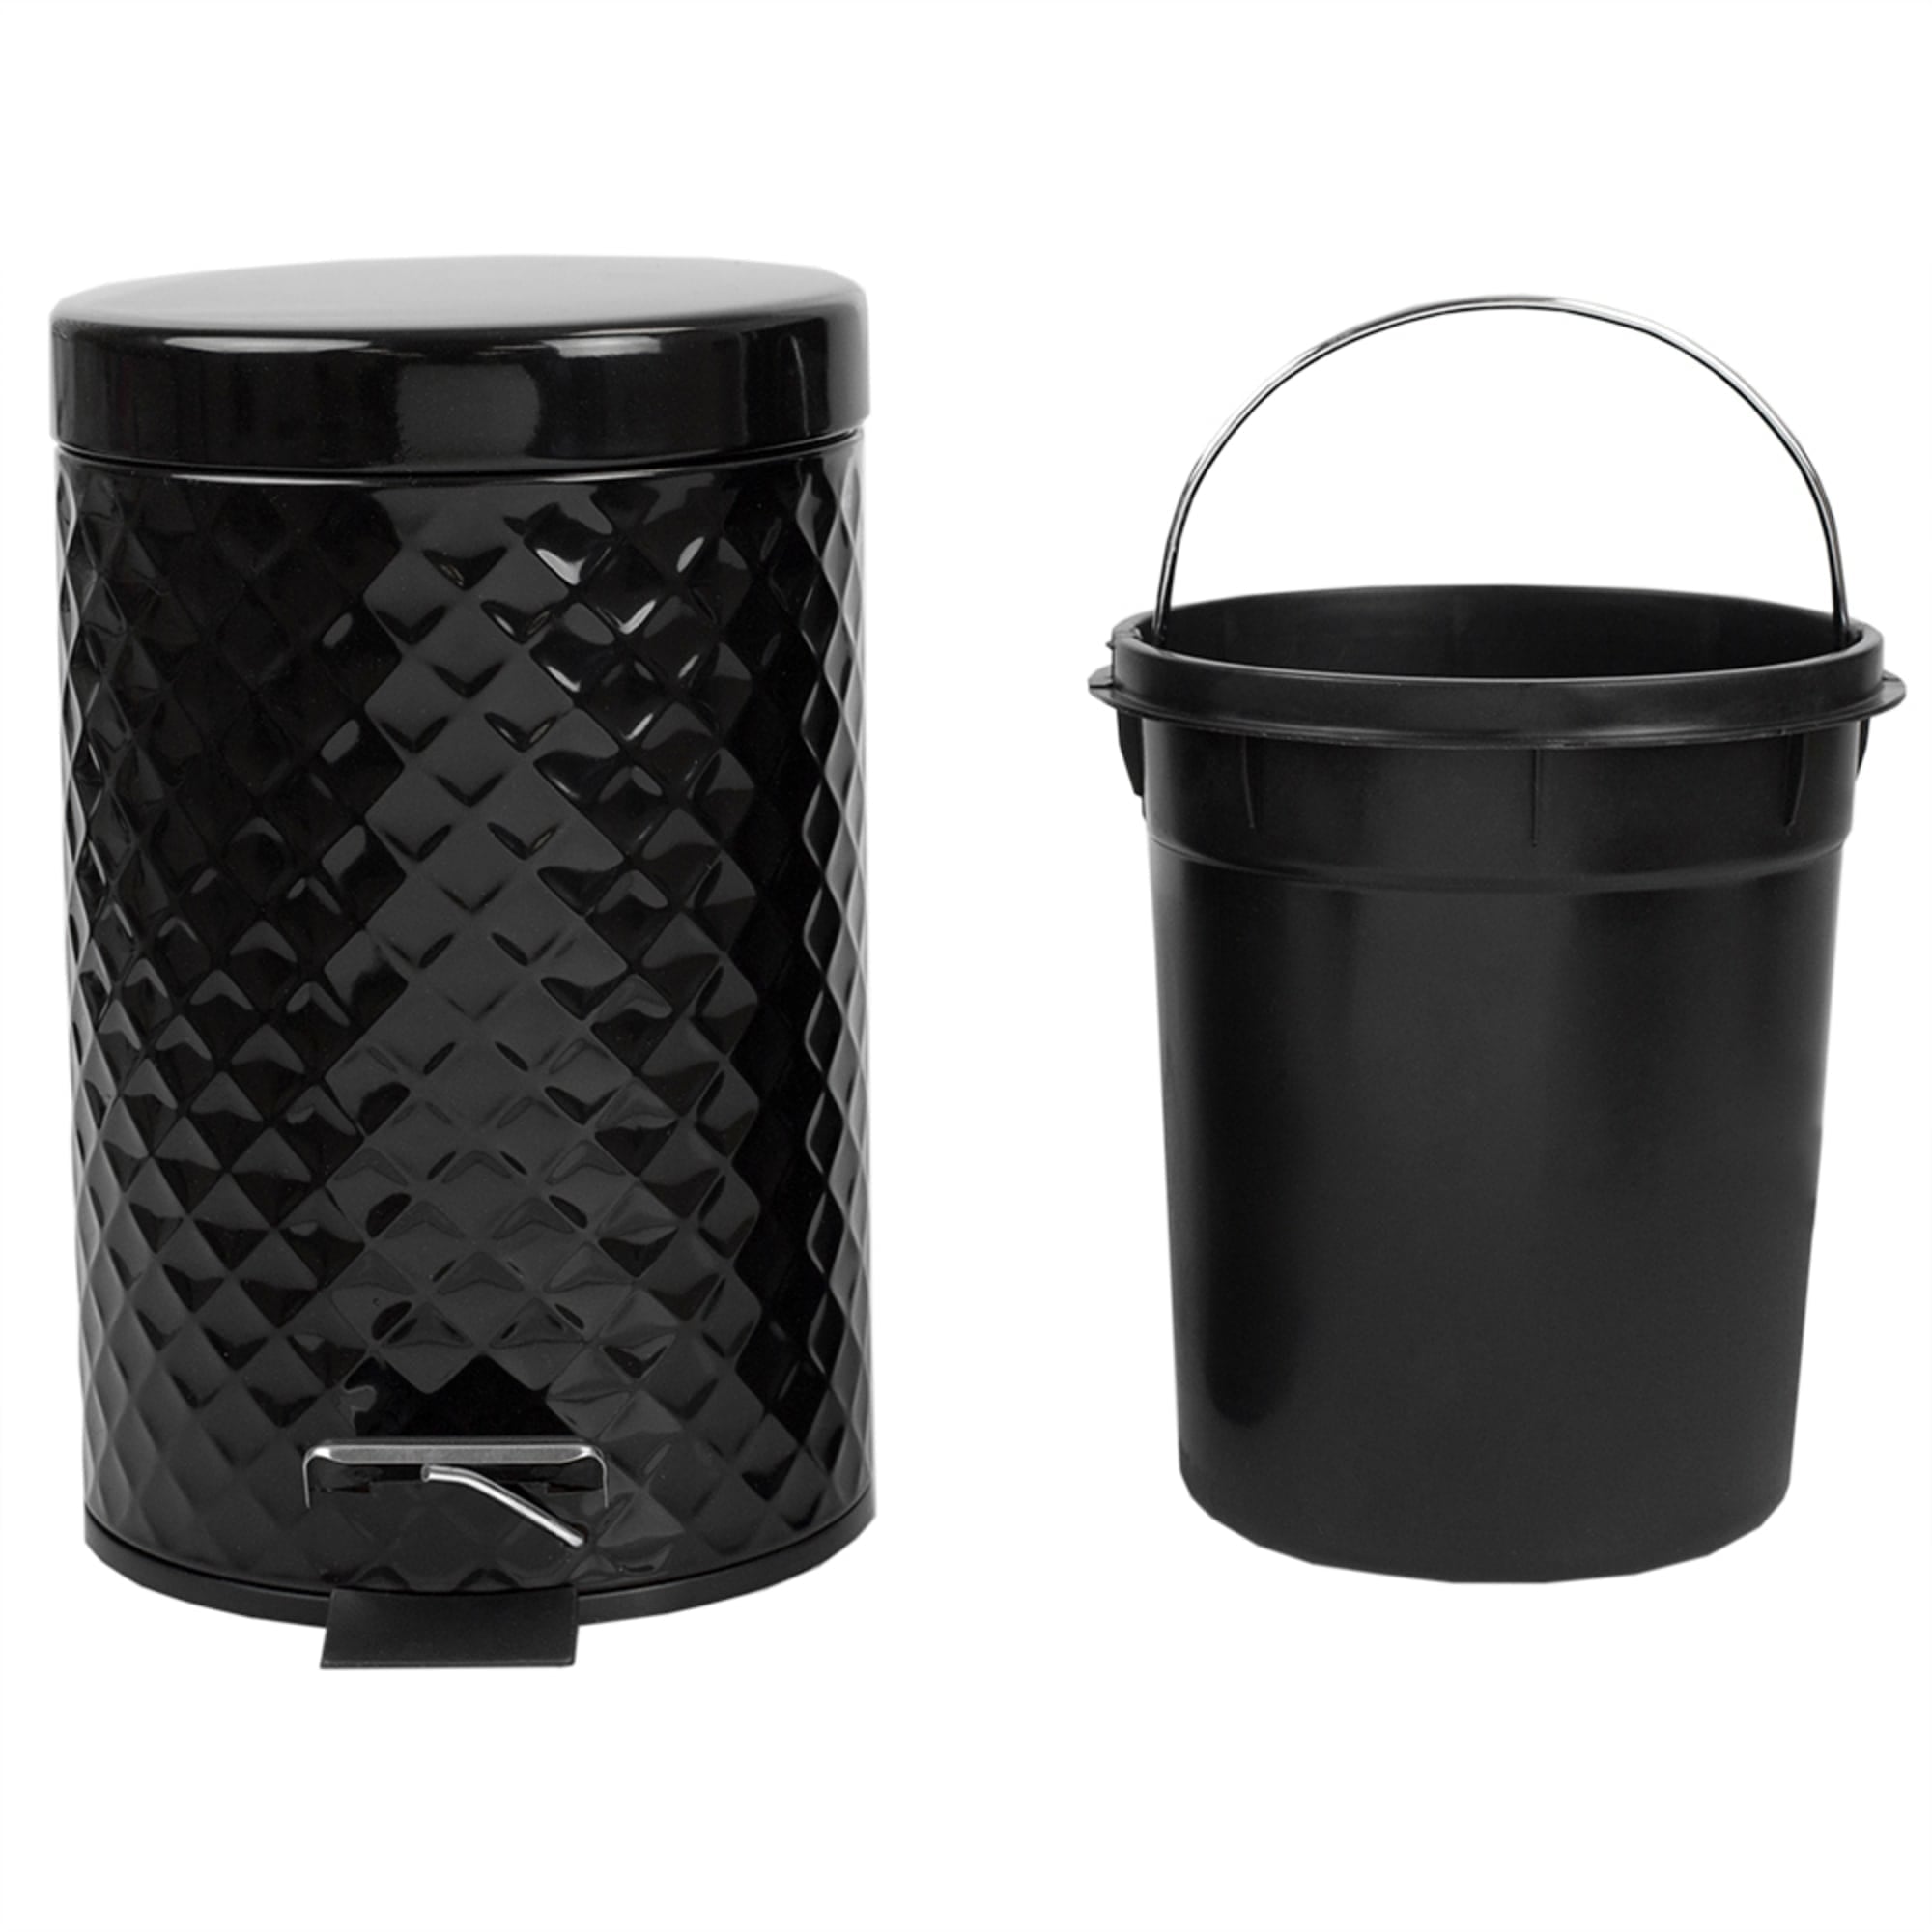 Home Basics 3 Liter Step-On Textured Steel Waste Bin, Black $8.00 EACH, CASE PACK OF 6